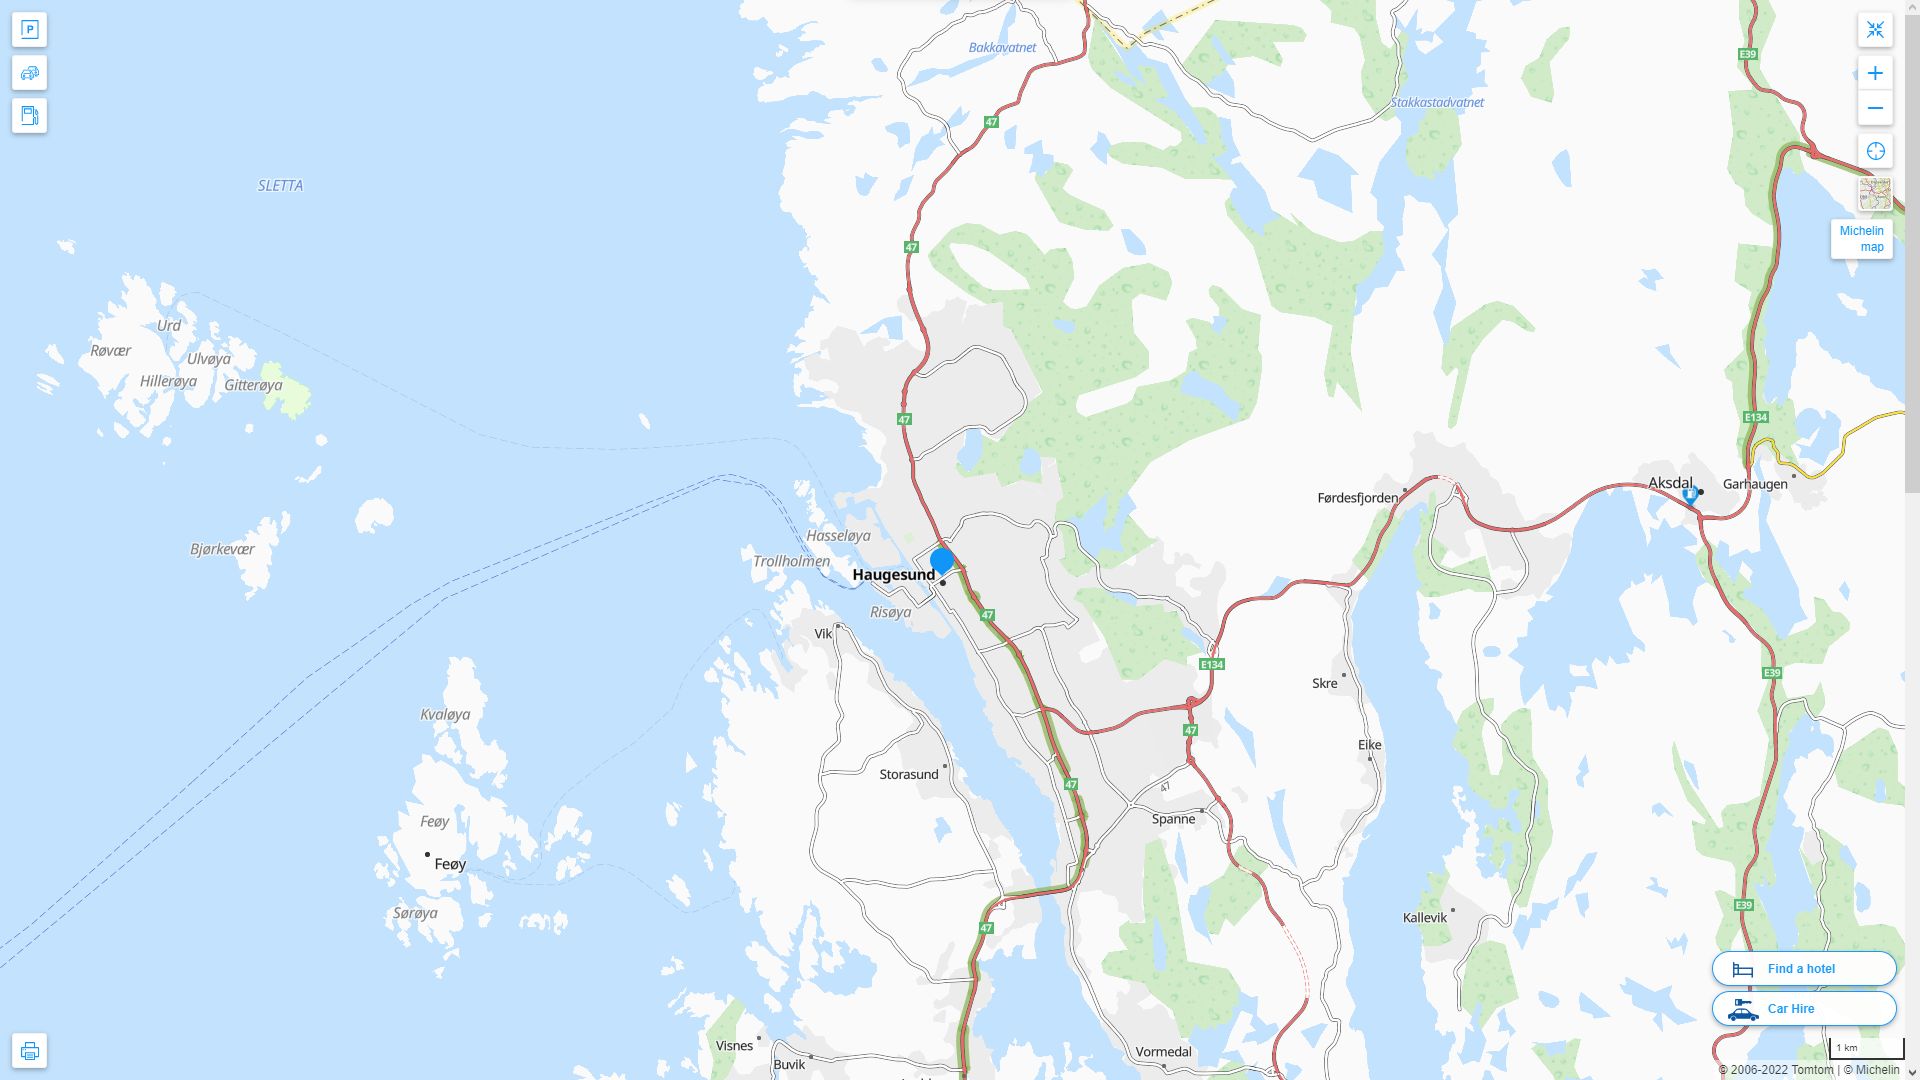 Haugesund Norvege Autoroute et carte routiere